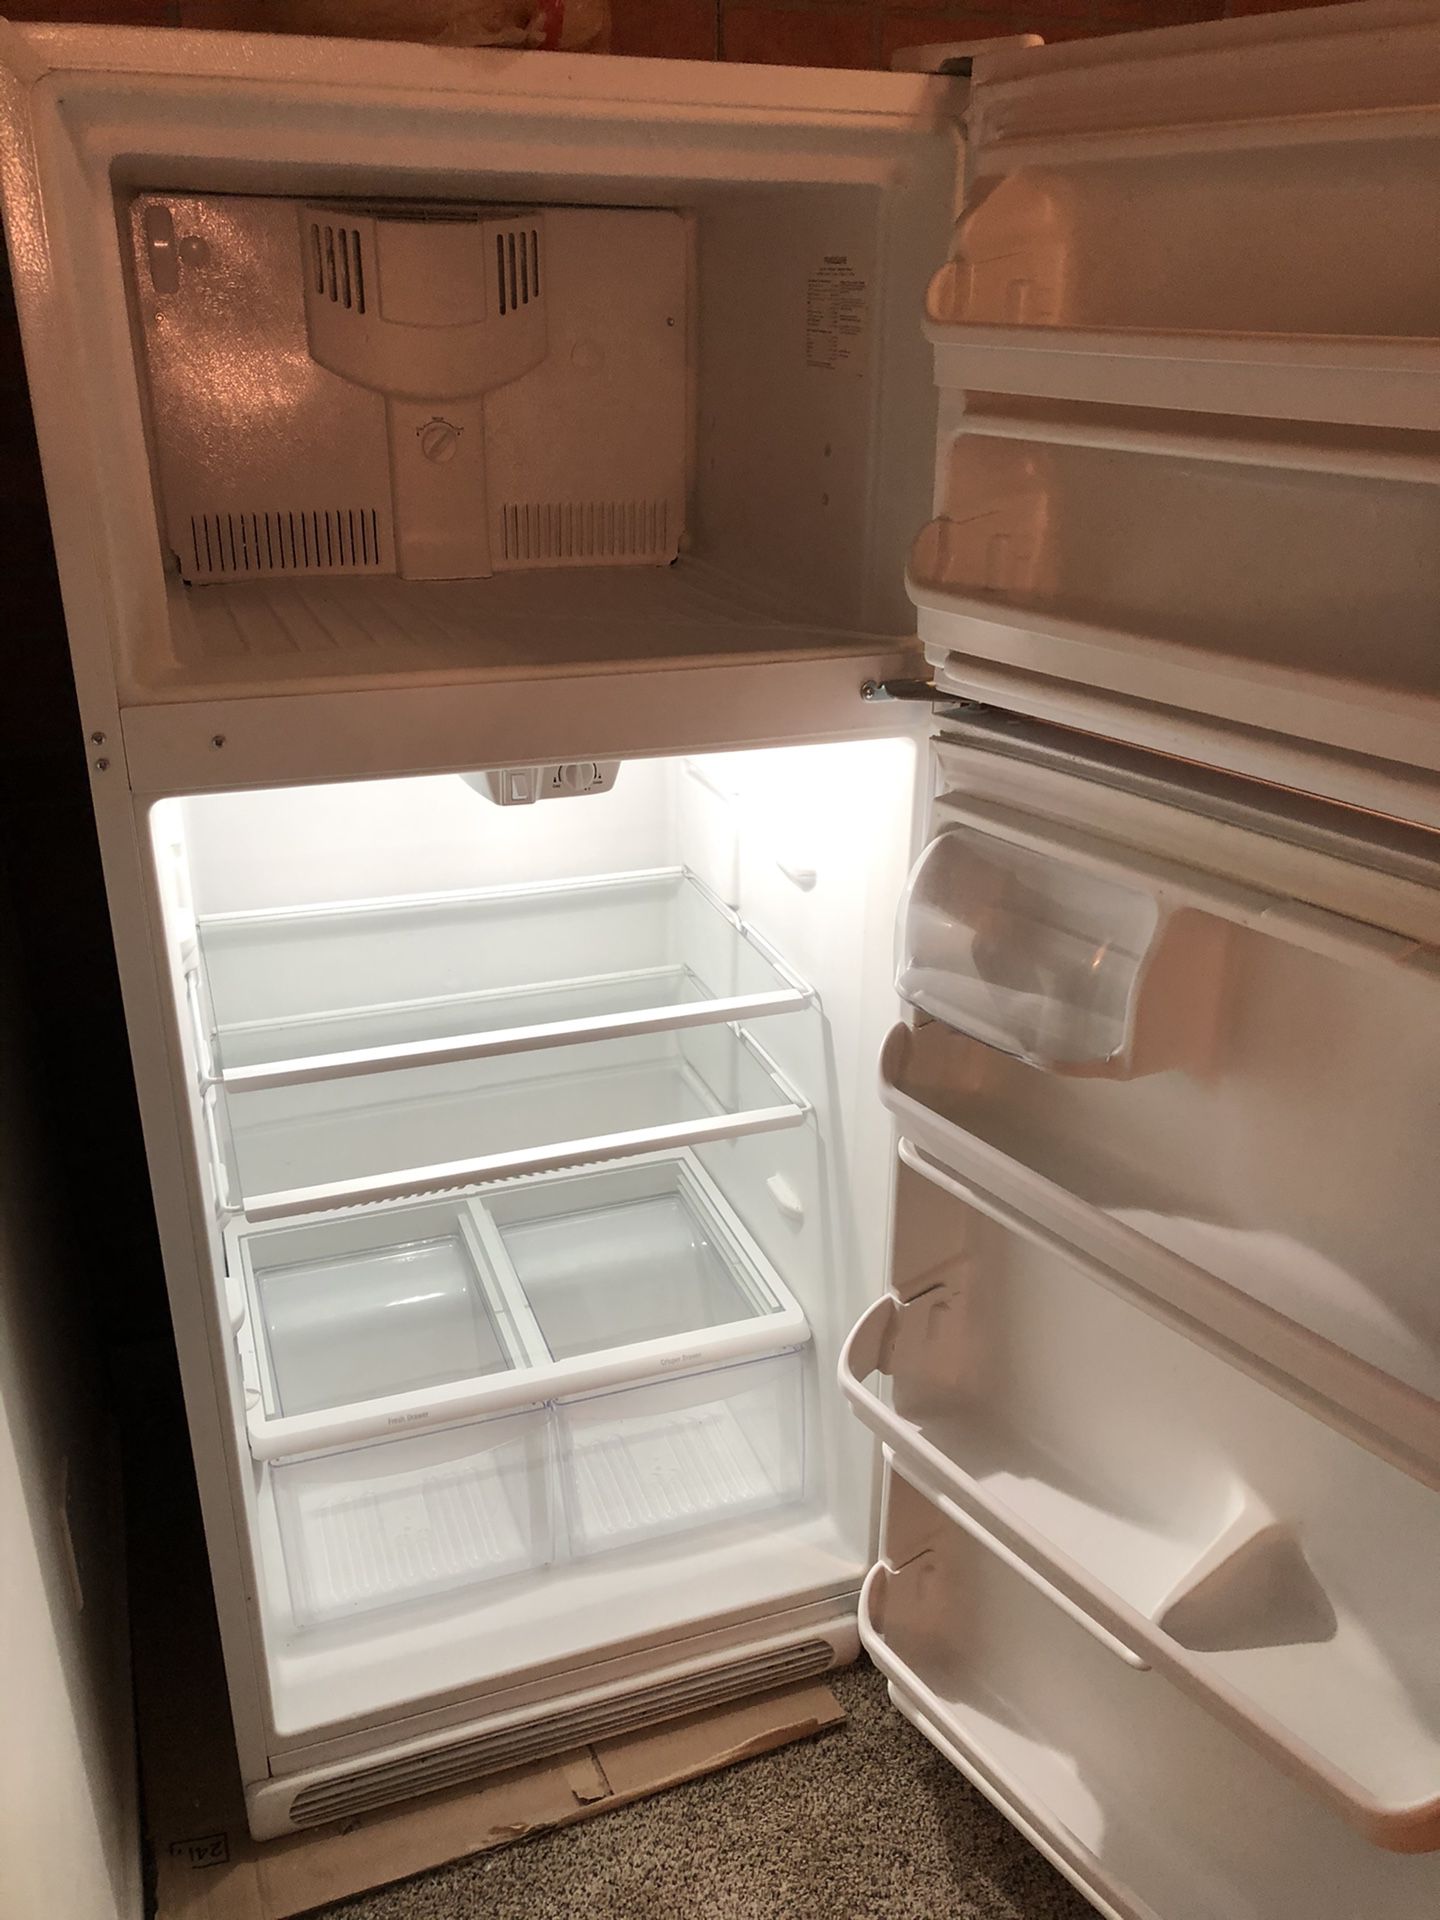 Almost new refrigerator